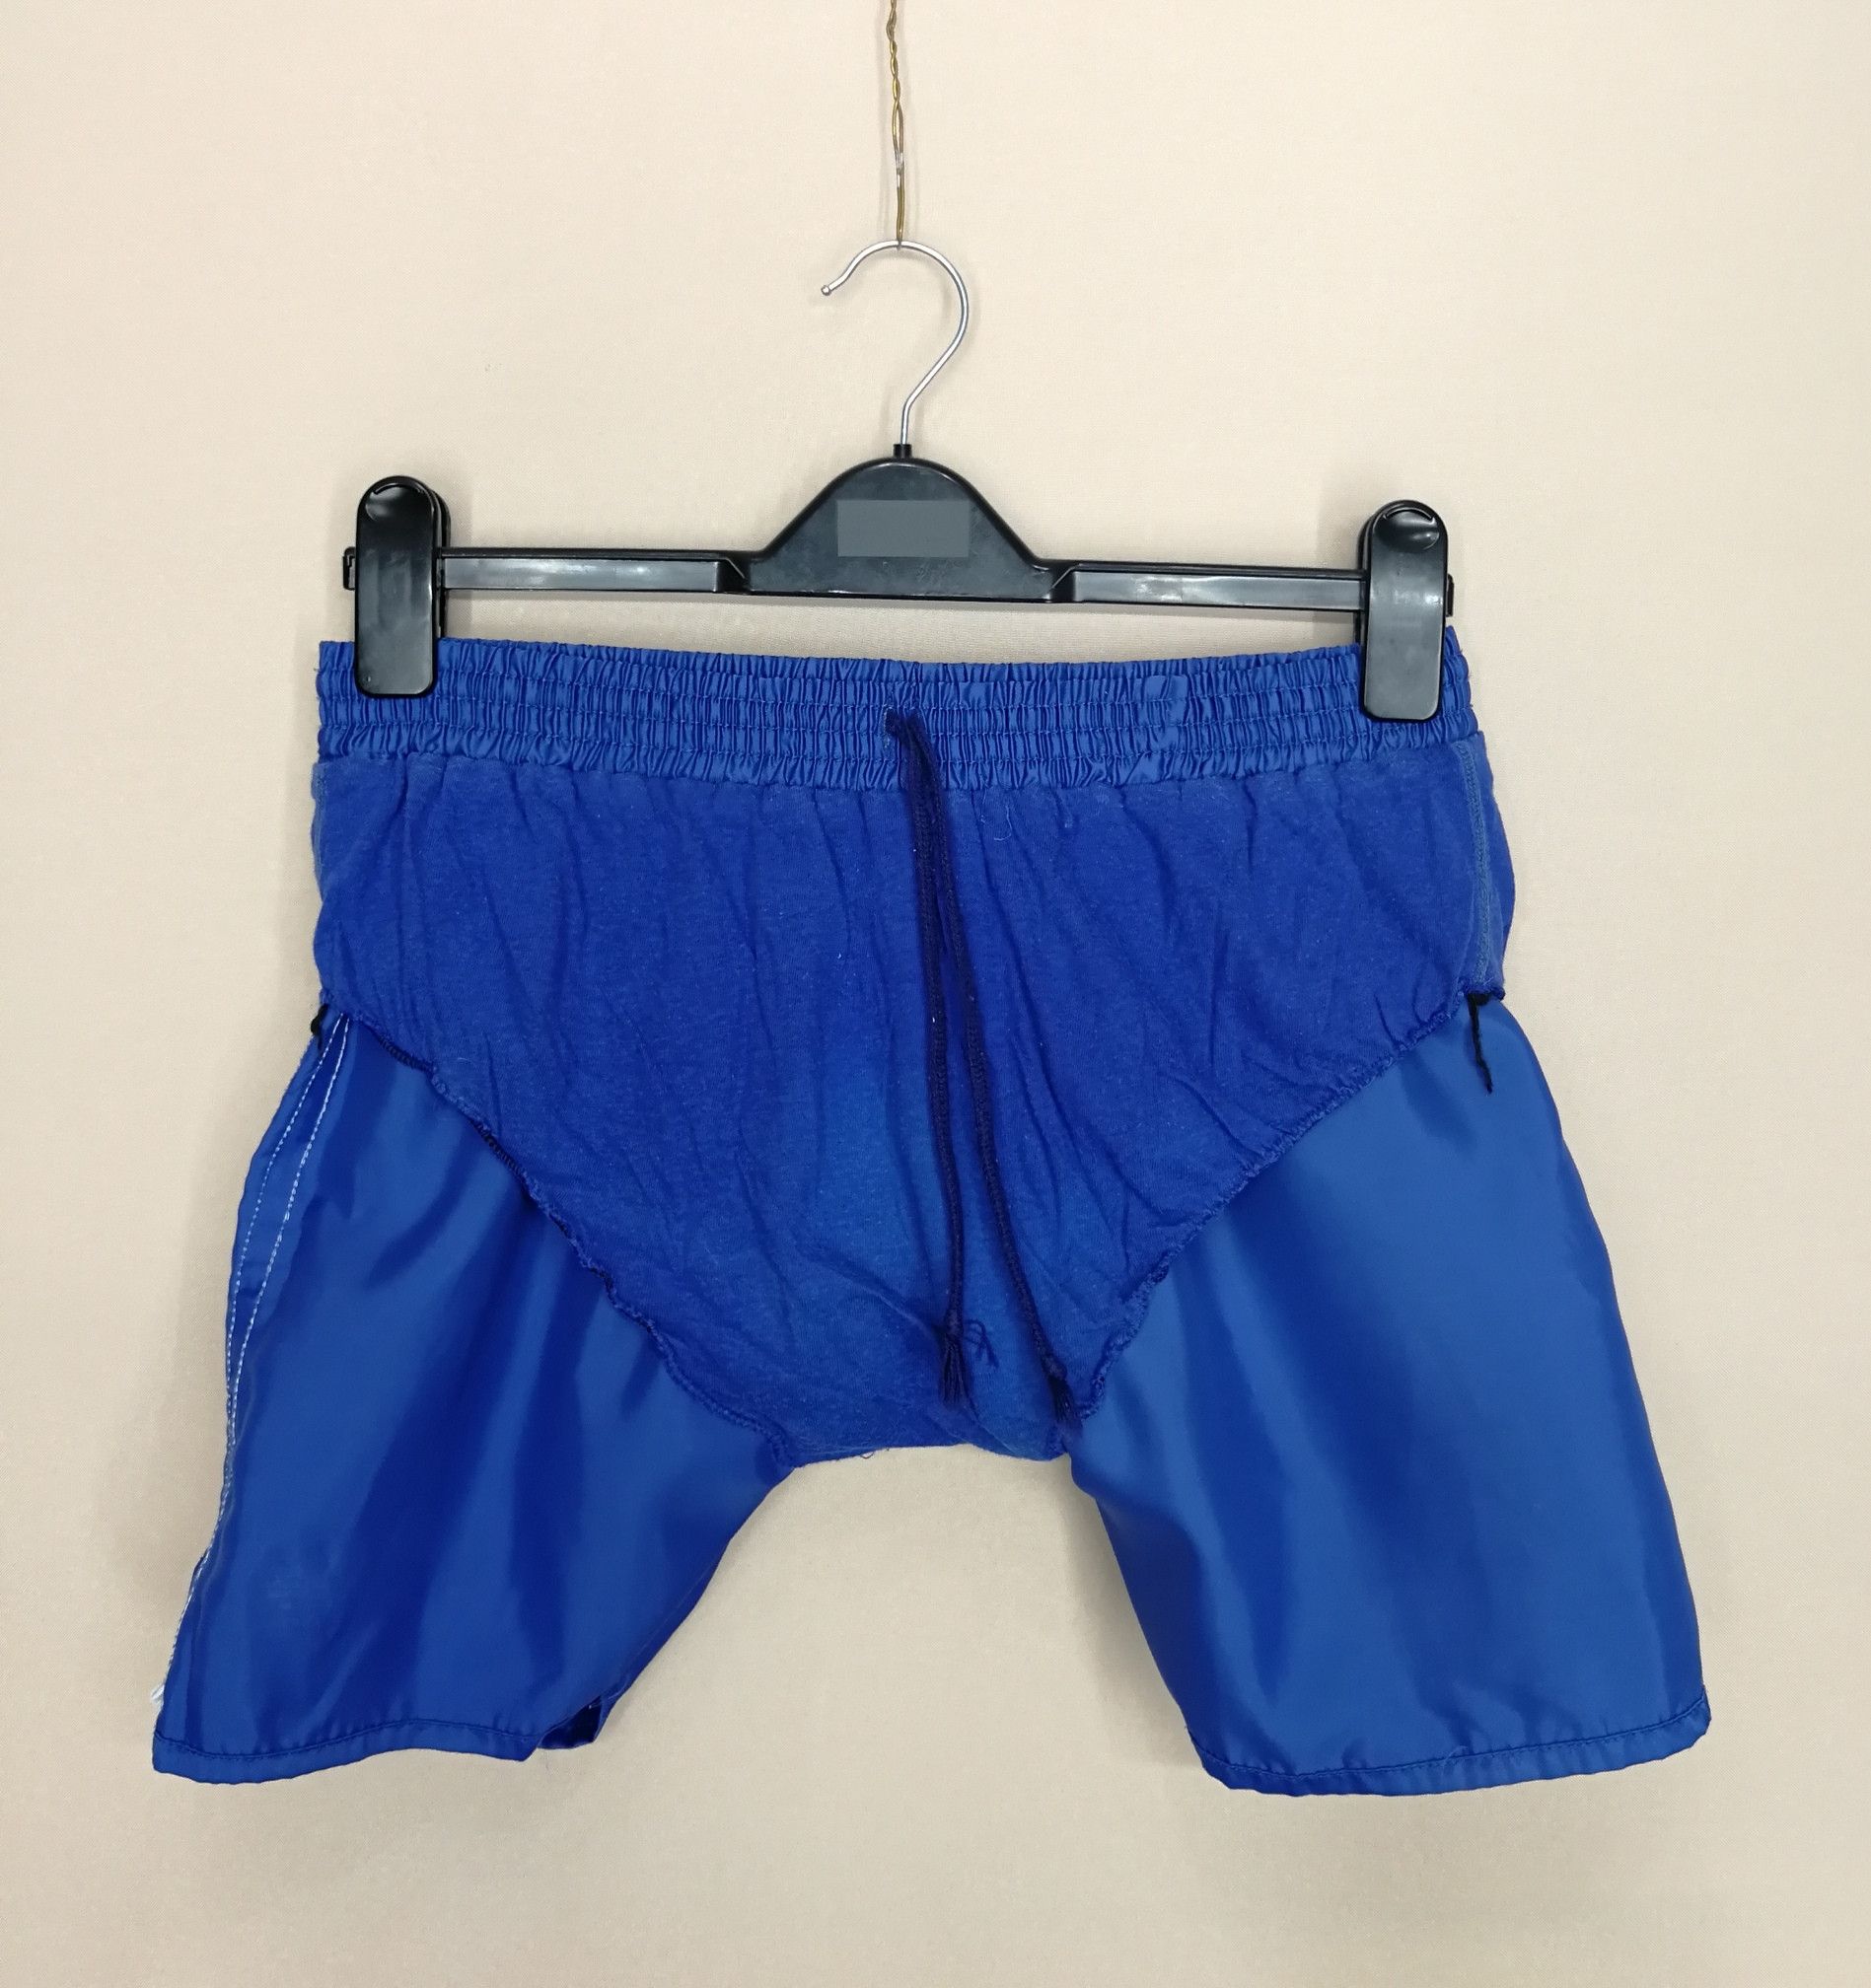 Adidas Vintage 80's Adidas Shorts Blue Yugoslavia Size US 32 / EU 48 - 8 Thumbnail